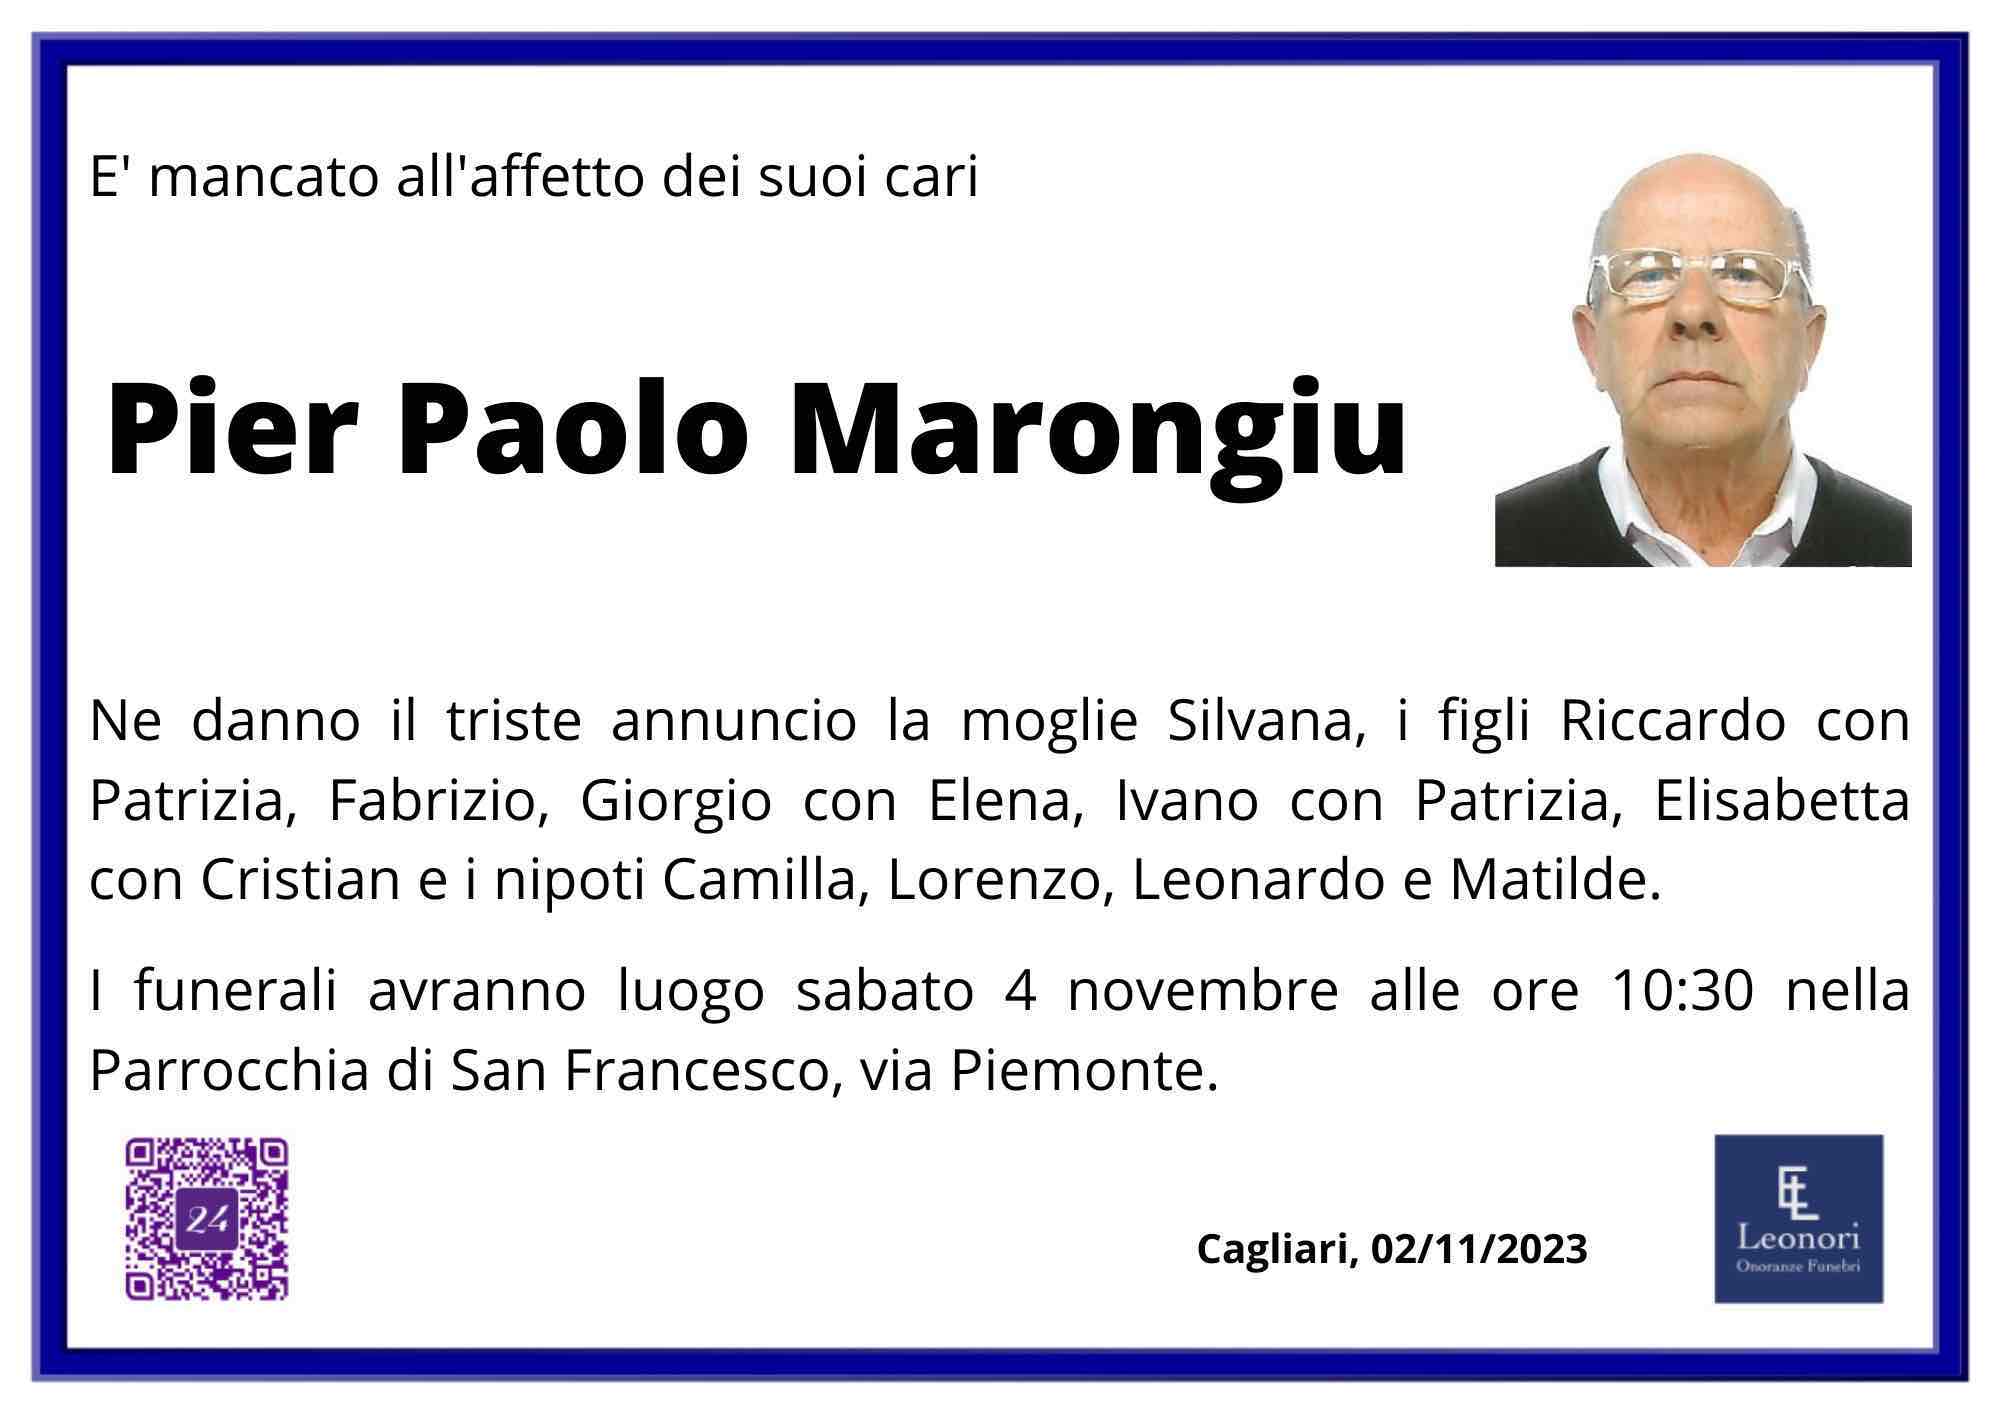 Piero Paolo Marongiu